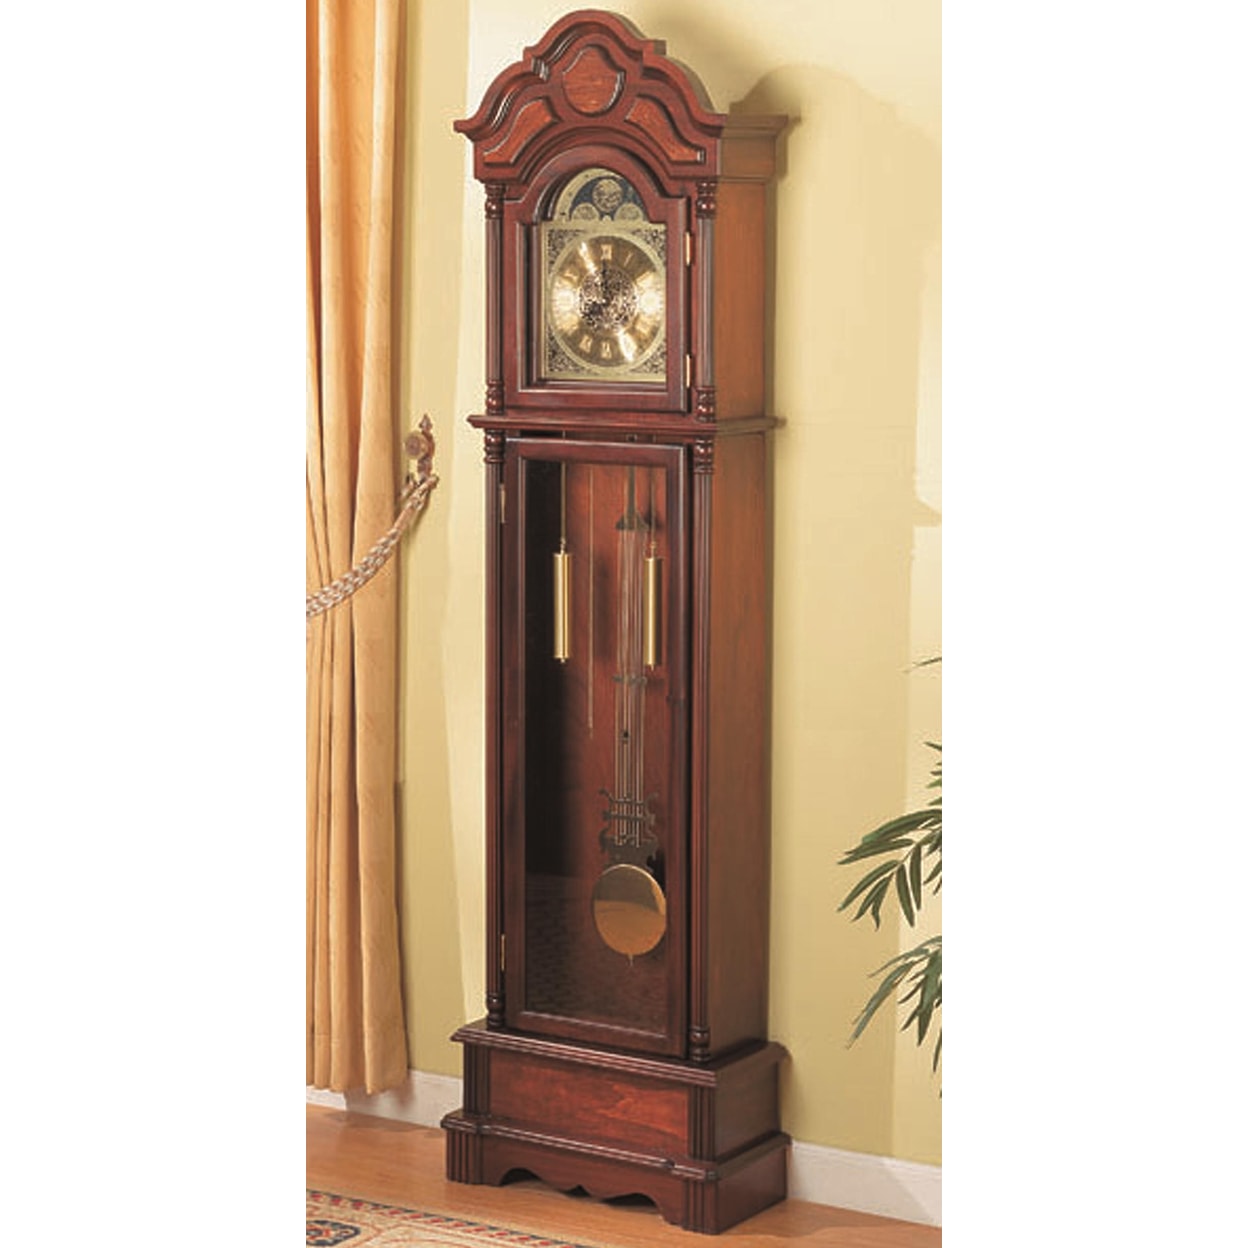 Michael Alan CSR Select Grandfather Clocks Grandfather Clock